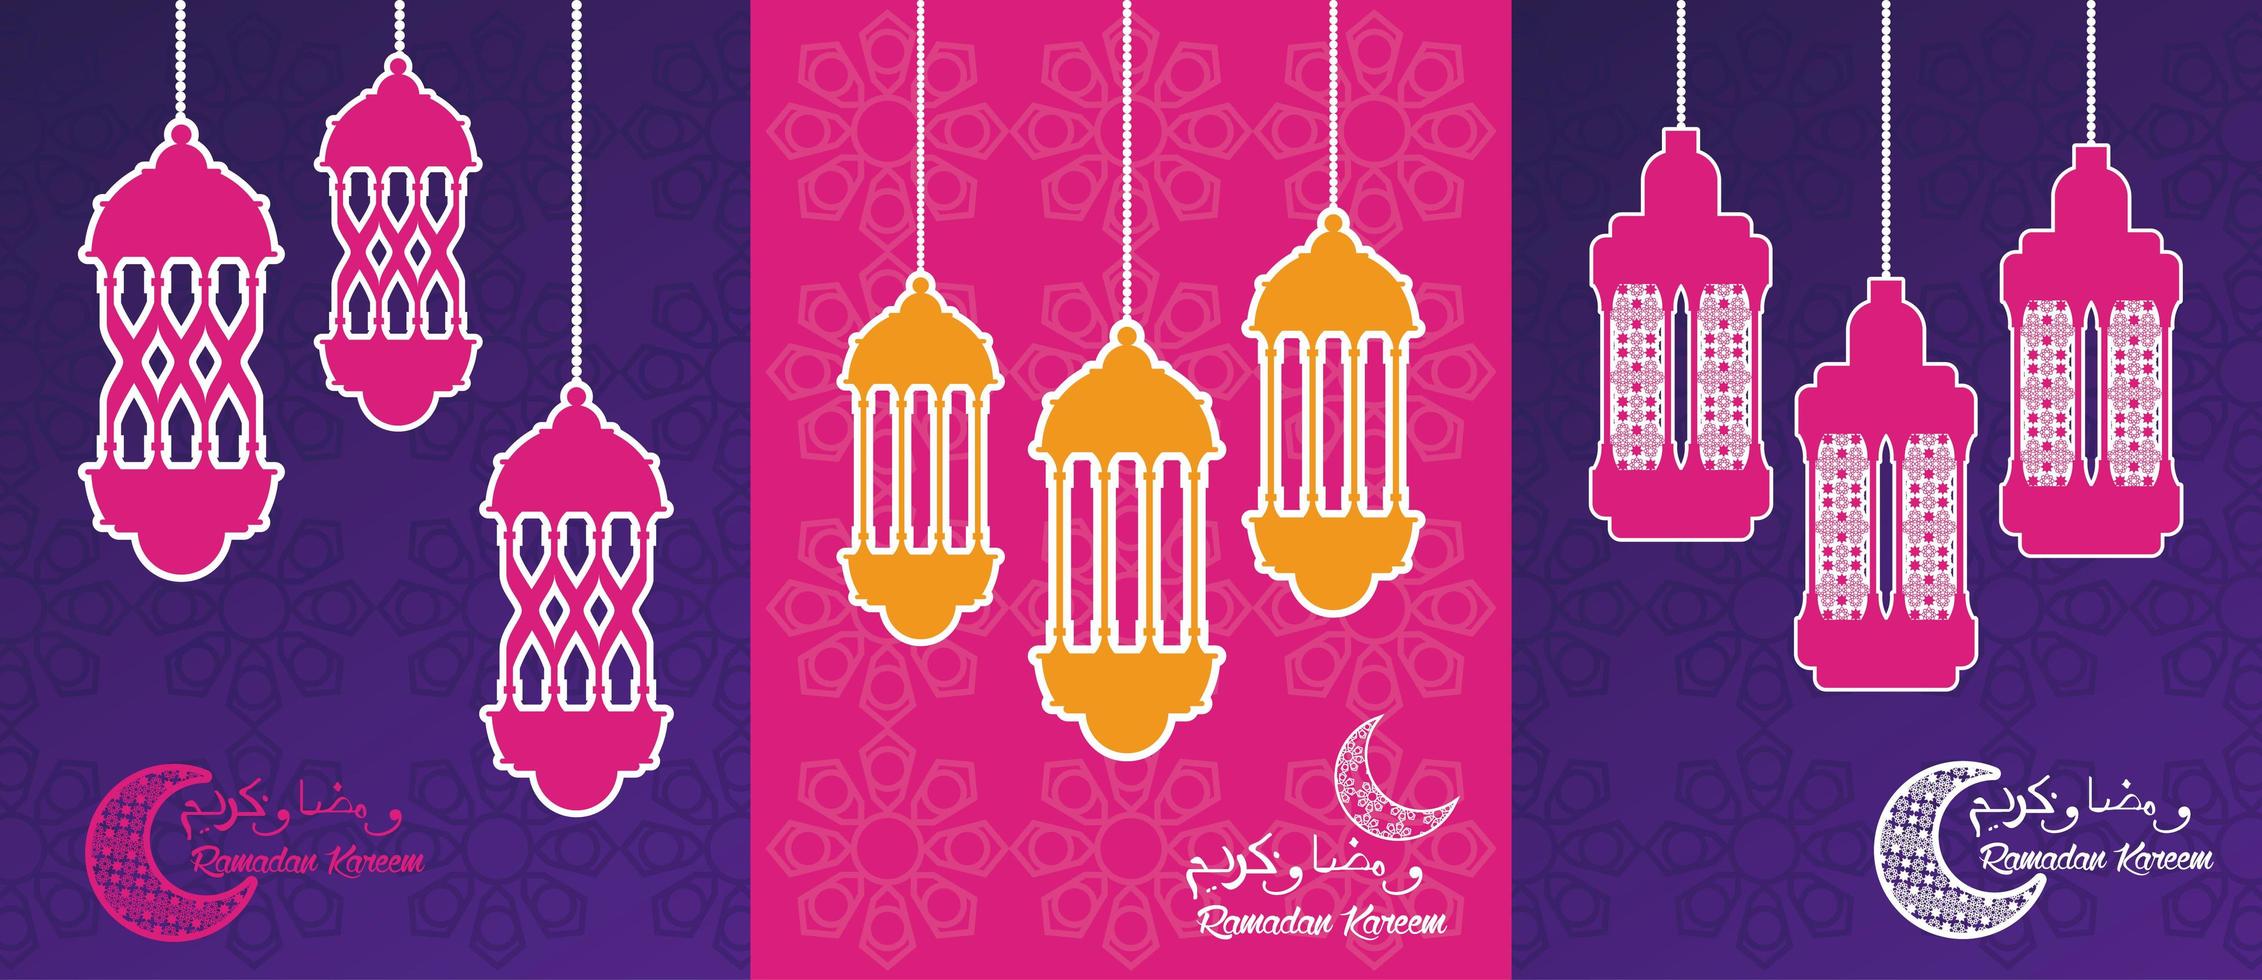 ramadan kareem celebration card with lanterns hanging vector